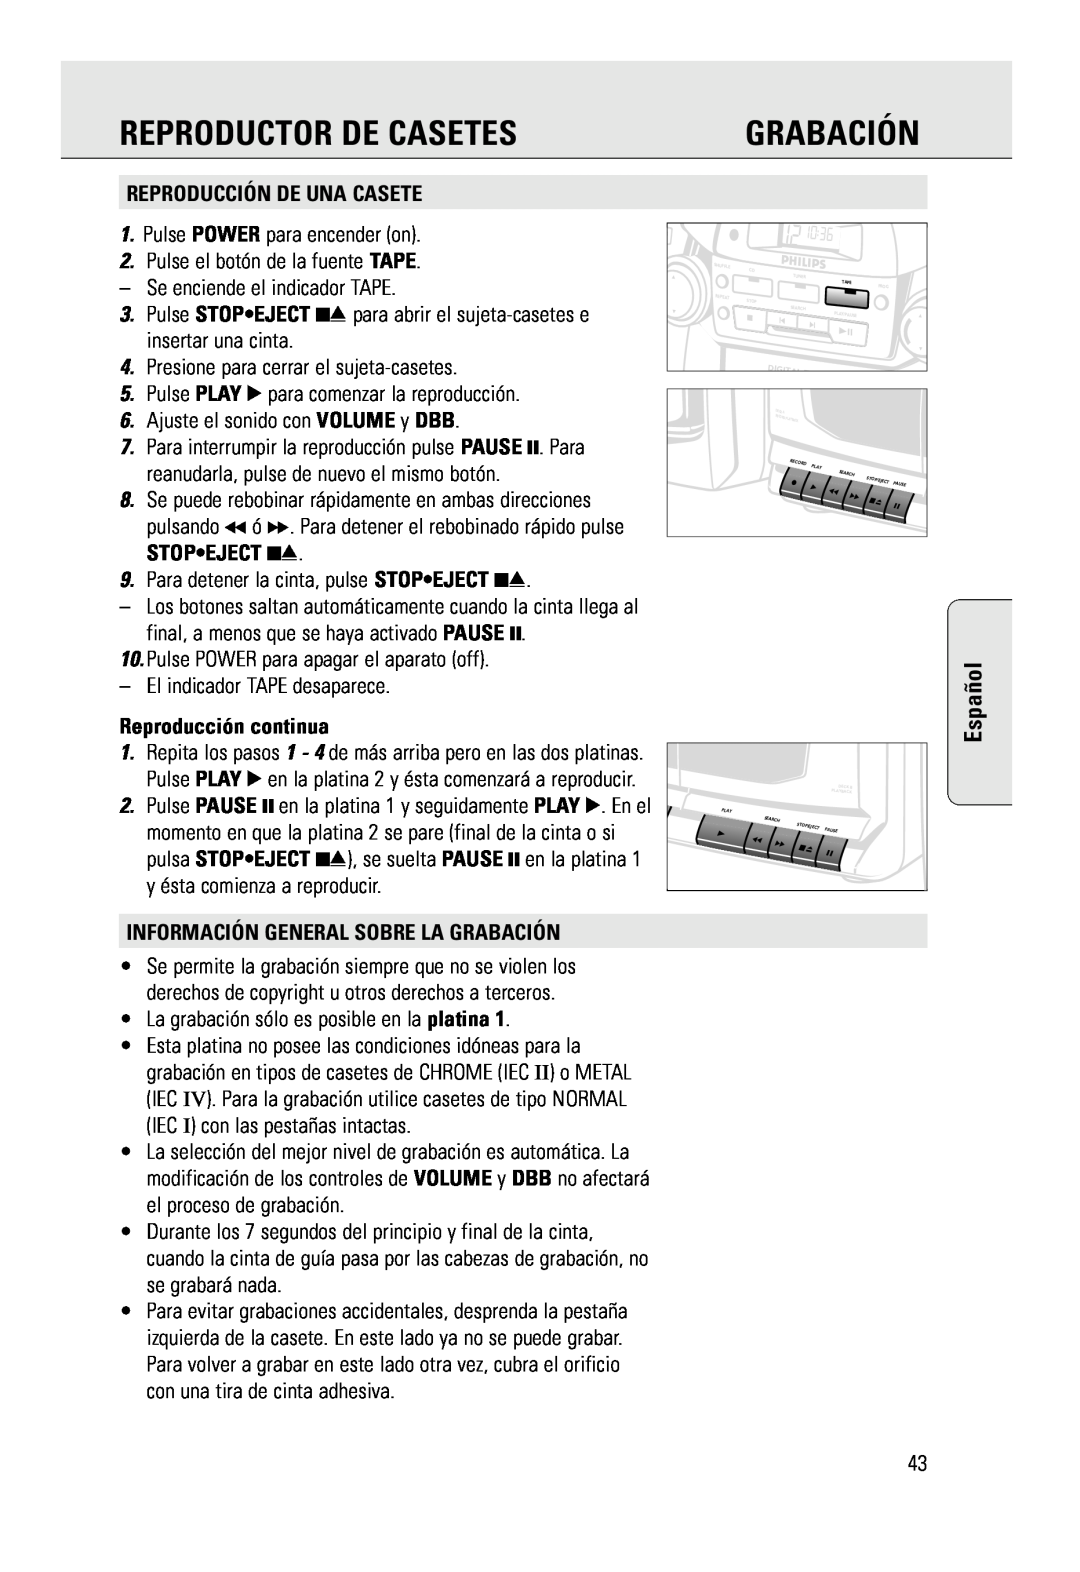 Philips AZ 2785 manual Reproductor De Casetes, Grabación, Español, Reproducción De Una Casete, Reproducción continua 